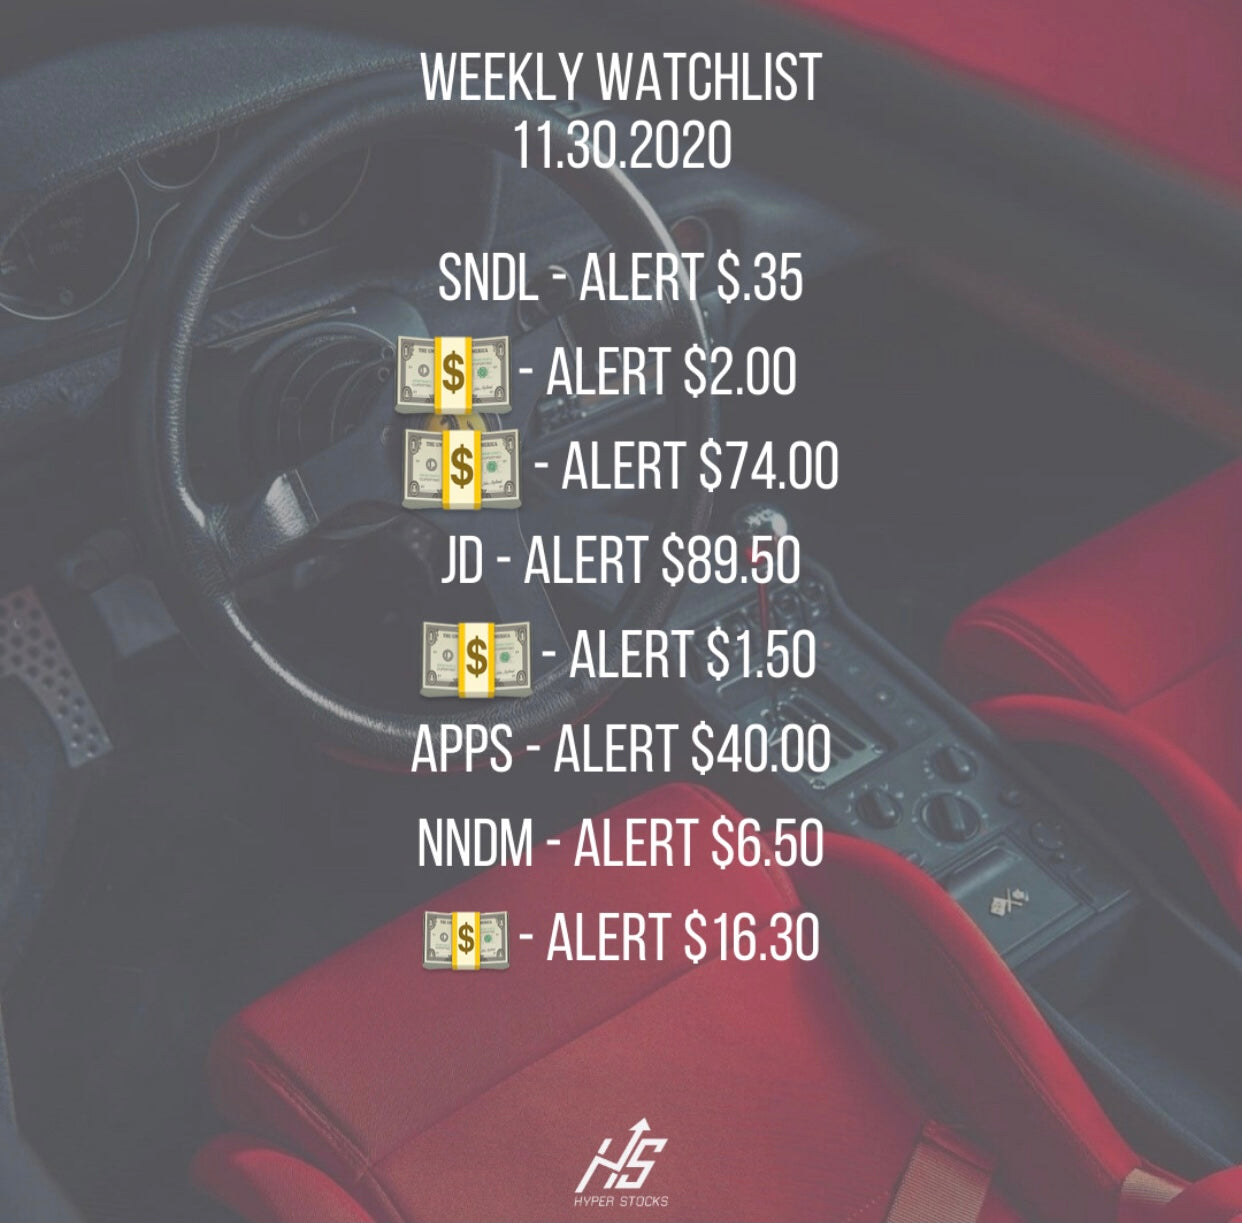 Weekly Watchlist 11.30.2020